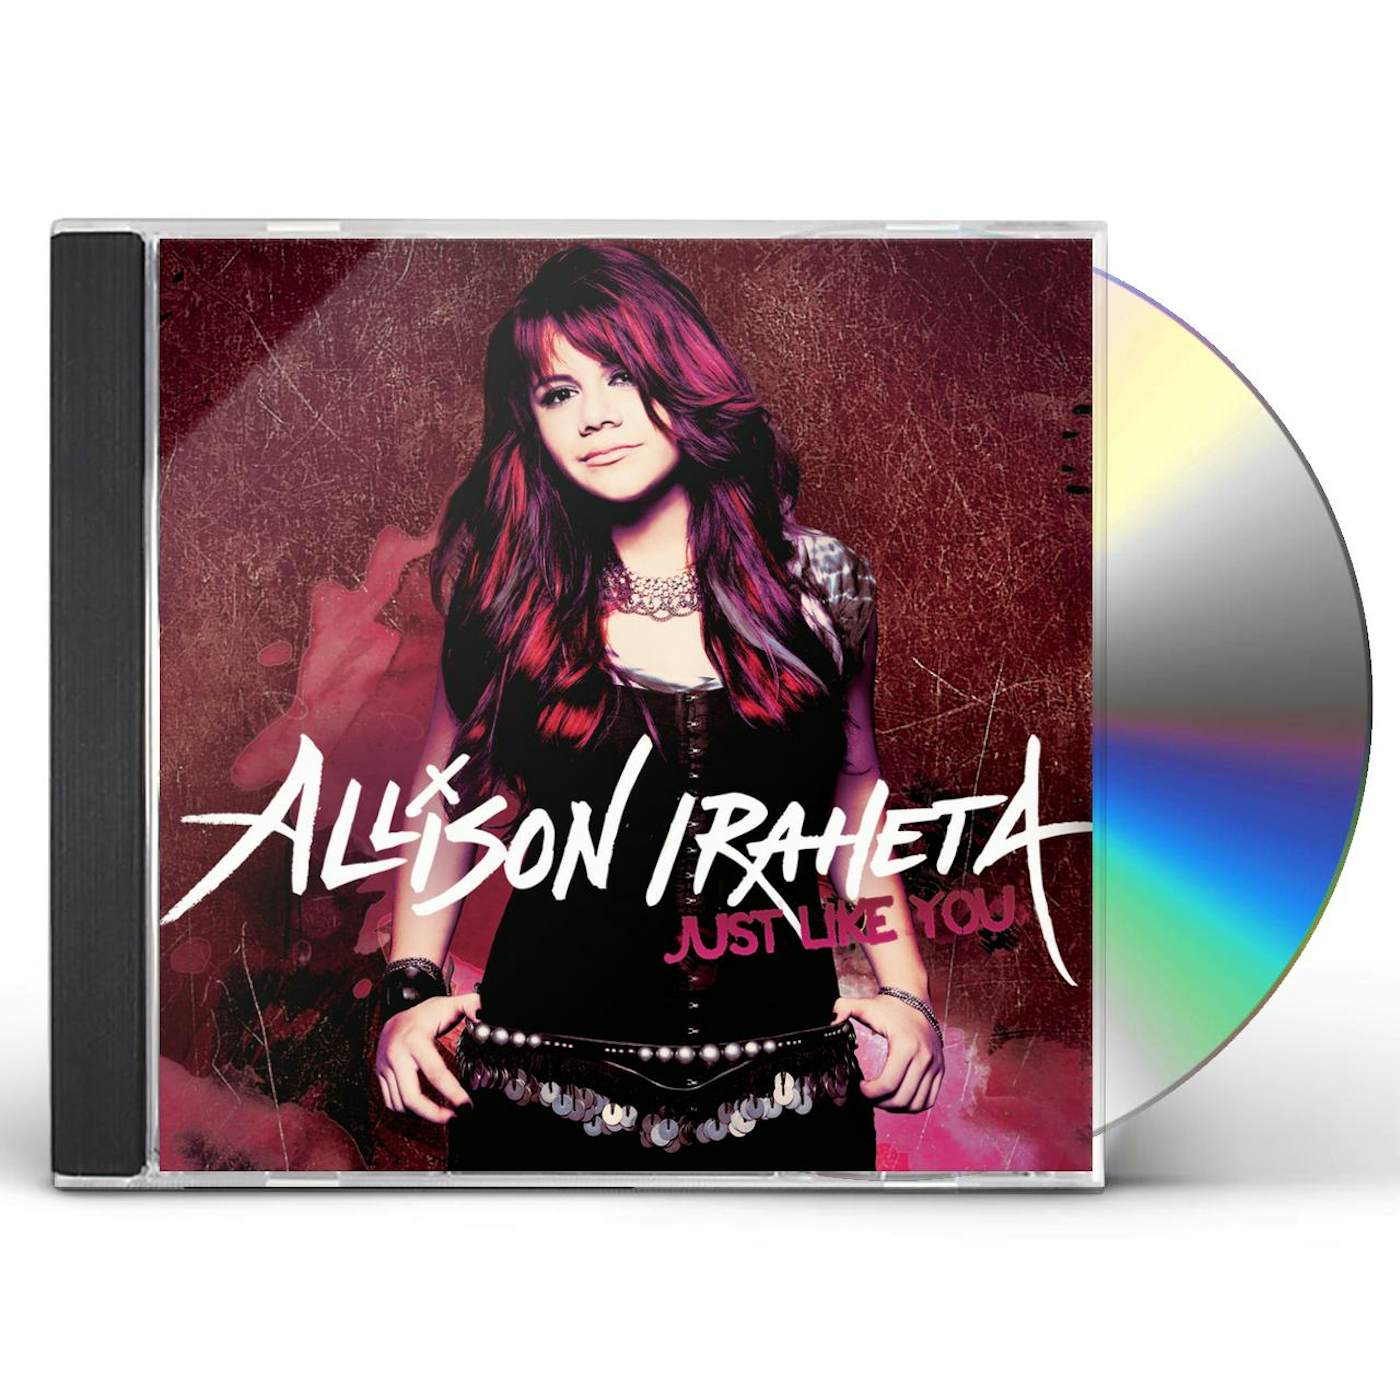 Allison Iraheta JUST LIKE YOU CD